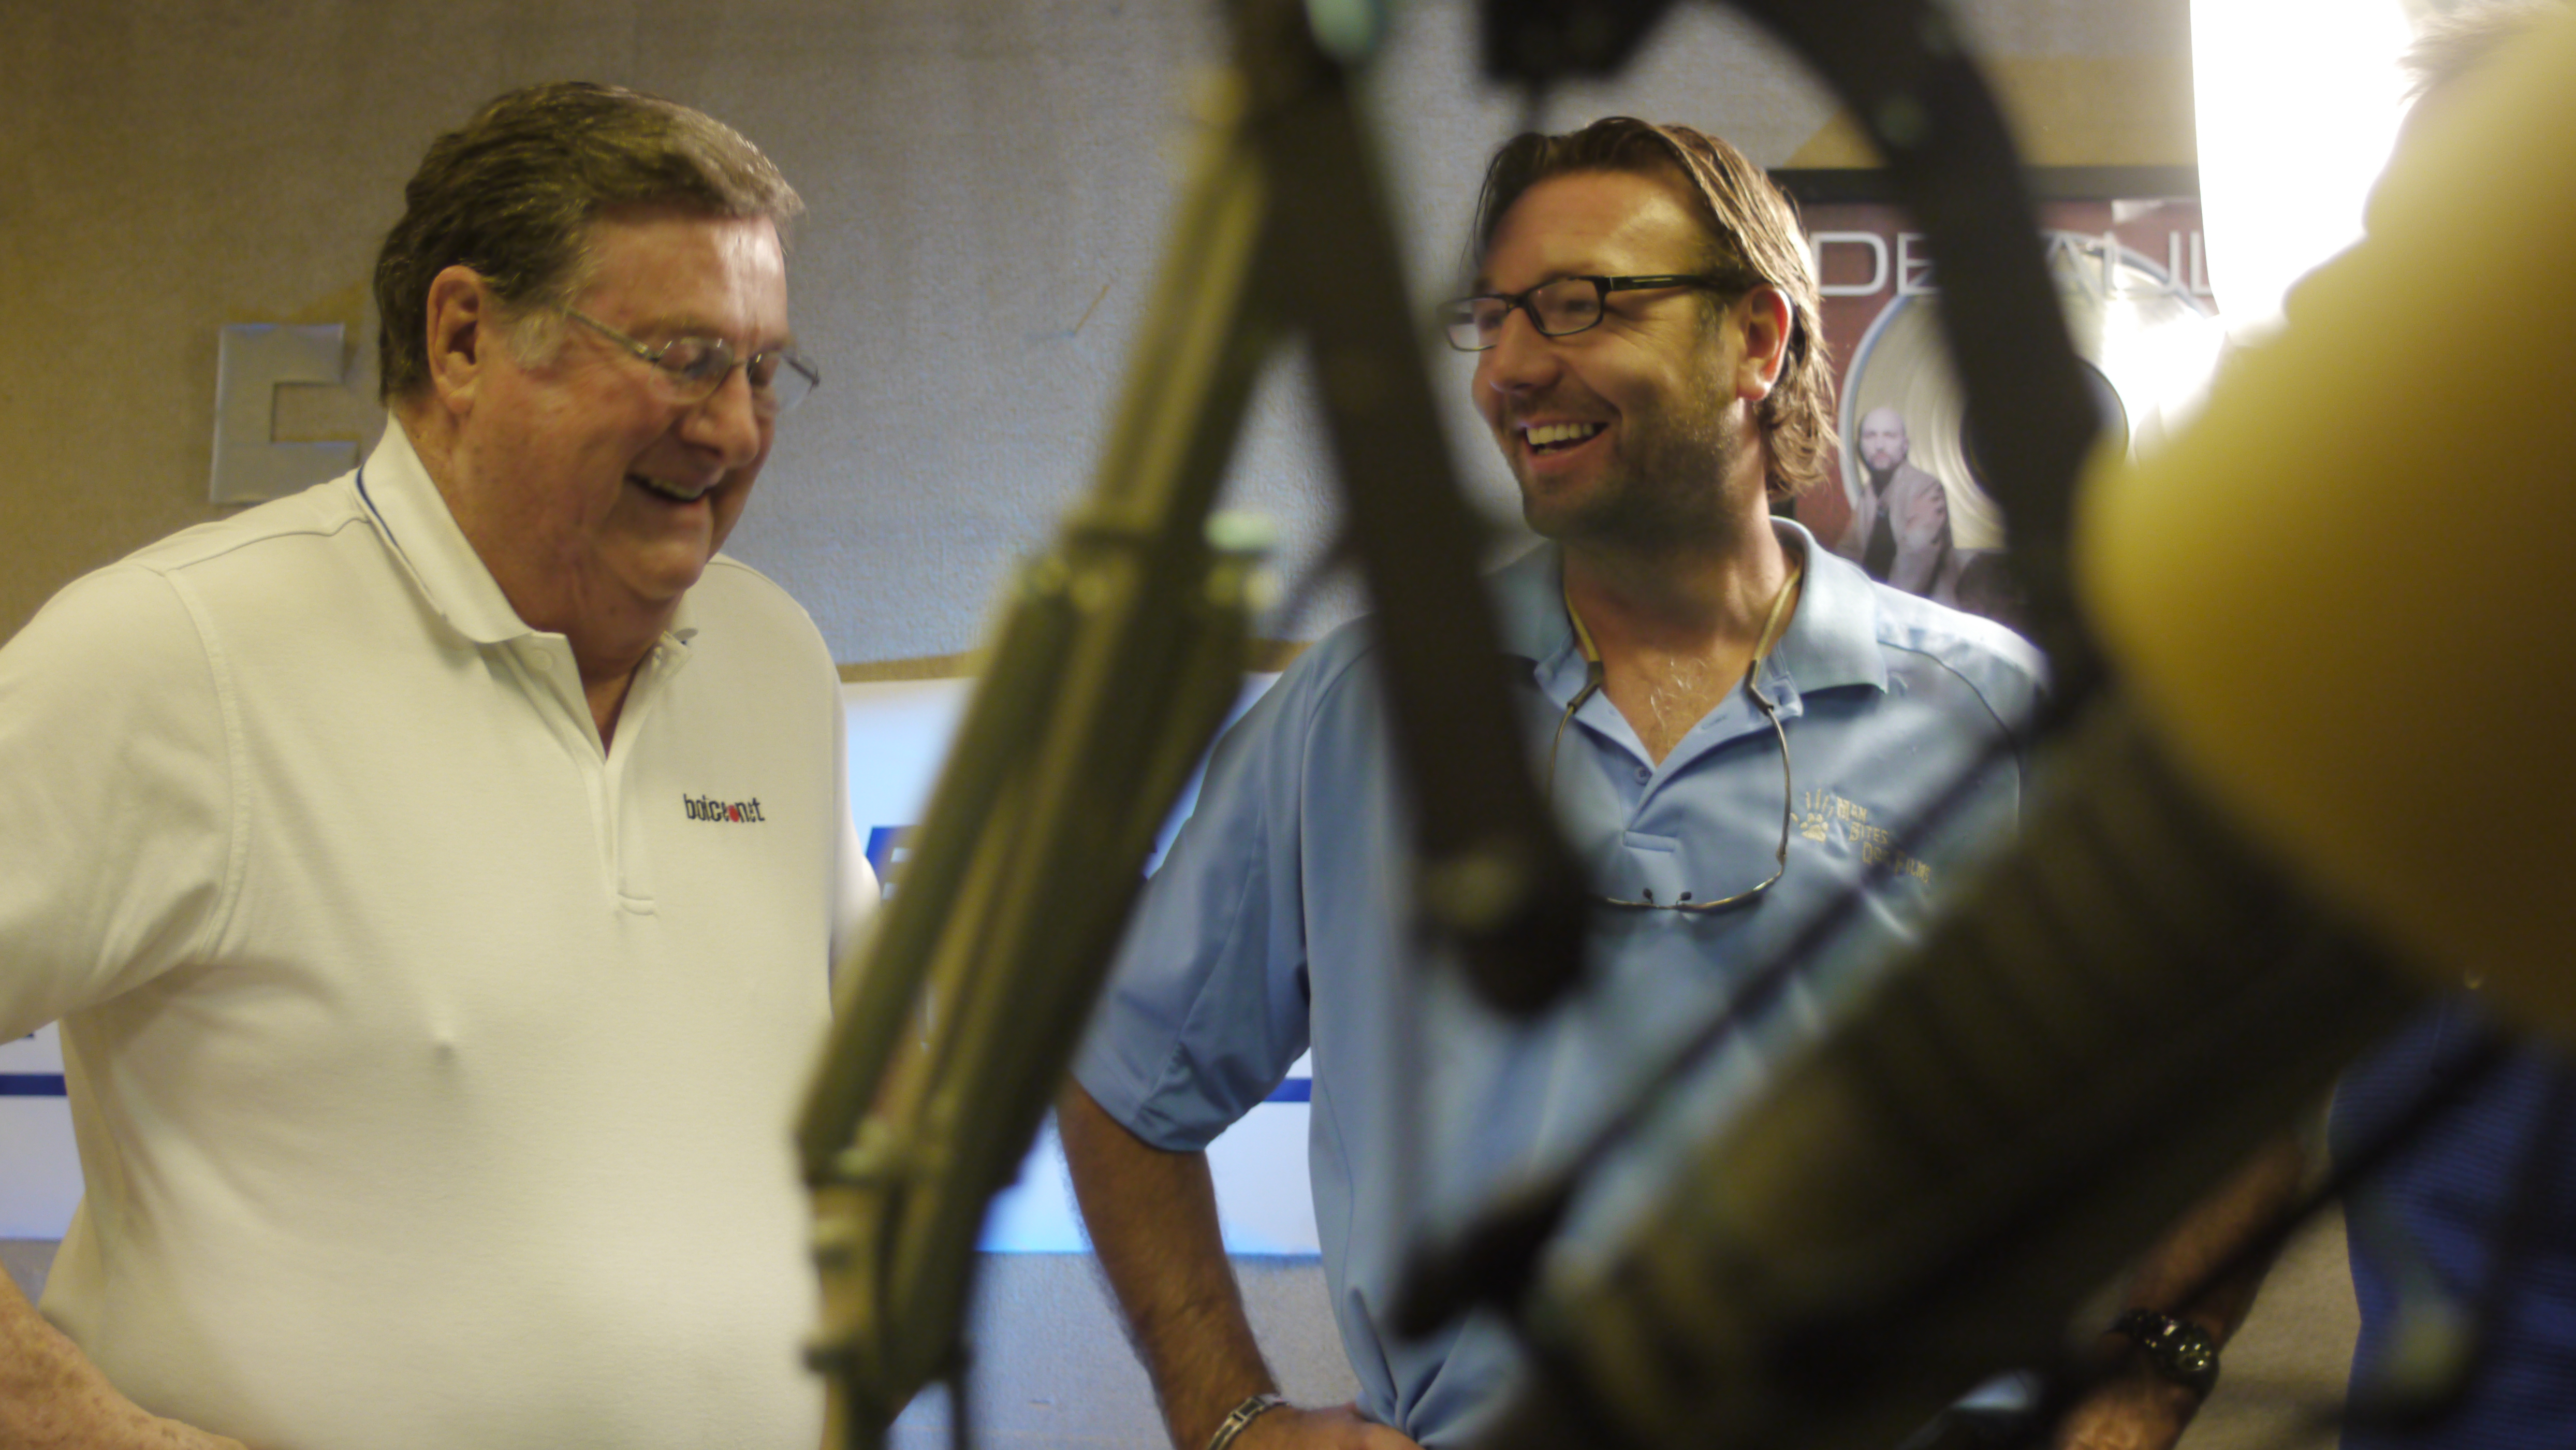 Producer Wm. Wade Smith with legendary Coach Joe B Hall inside the Z-Rock Radio Station in Lexington, Kentucky. Filming Red v Blue